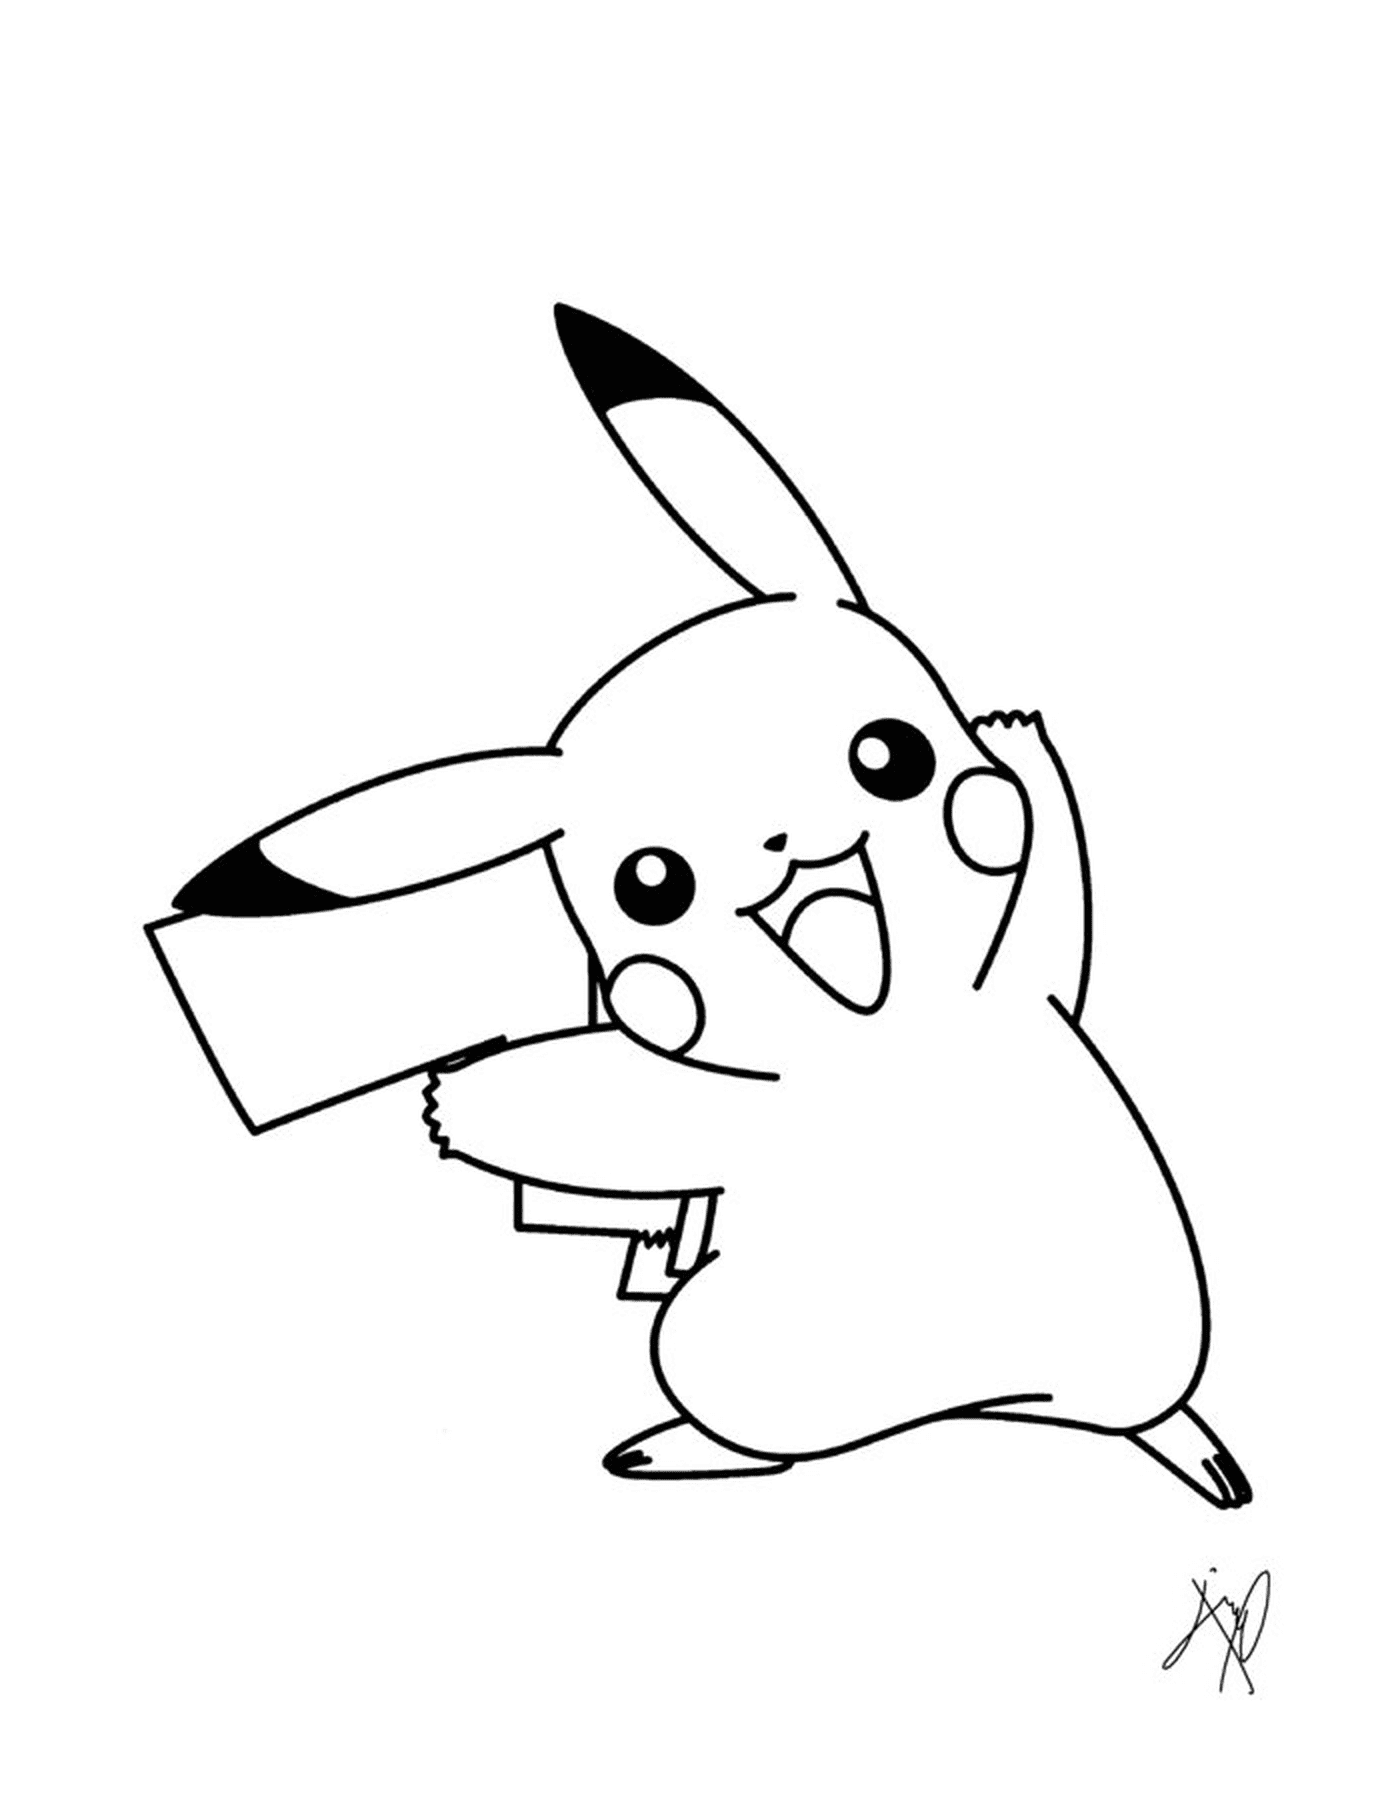  Pikachu segura um sinal 